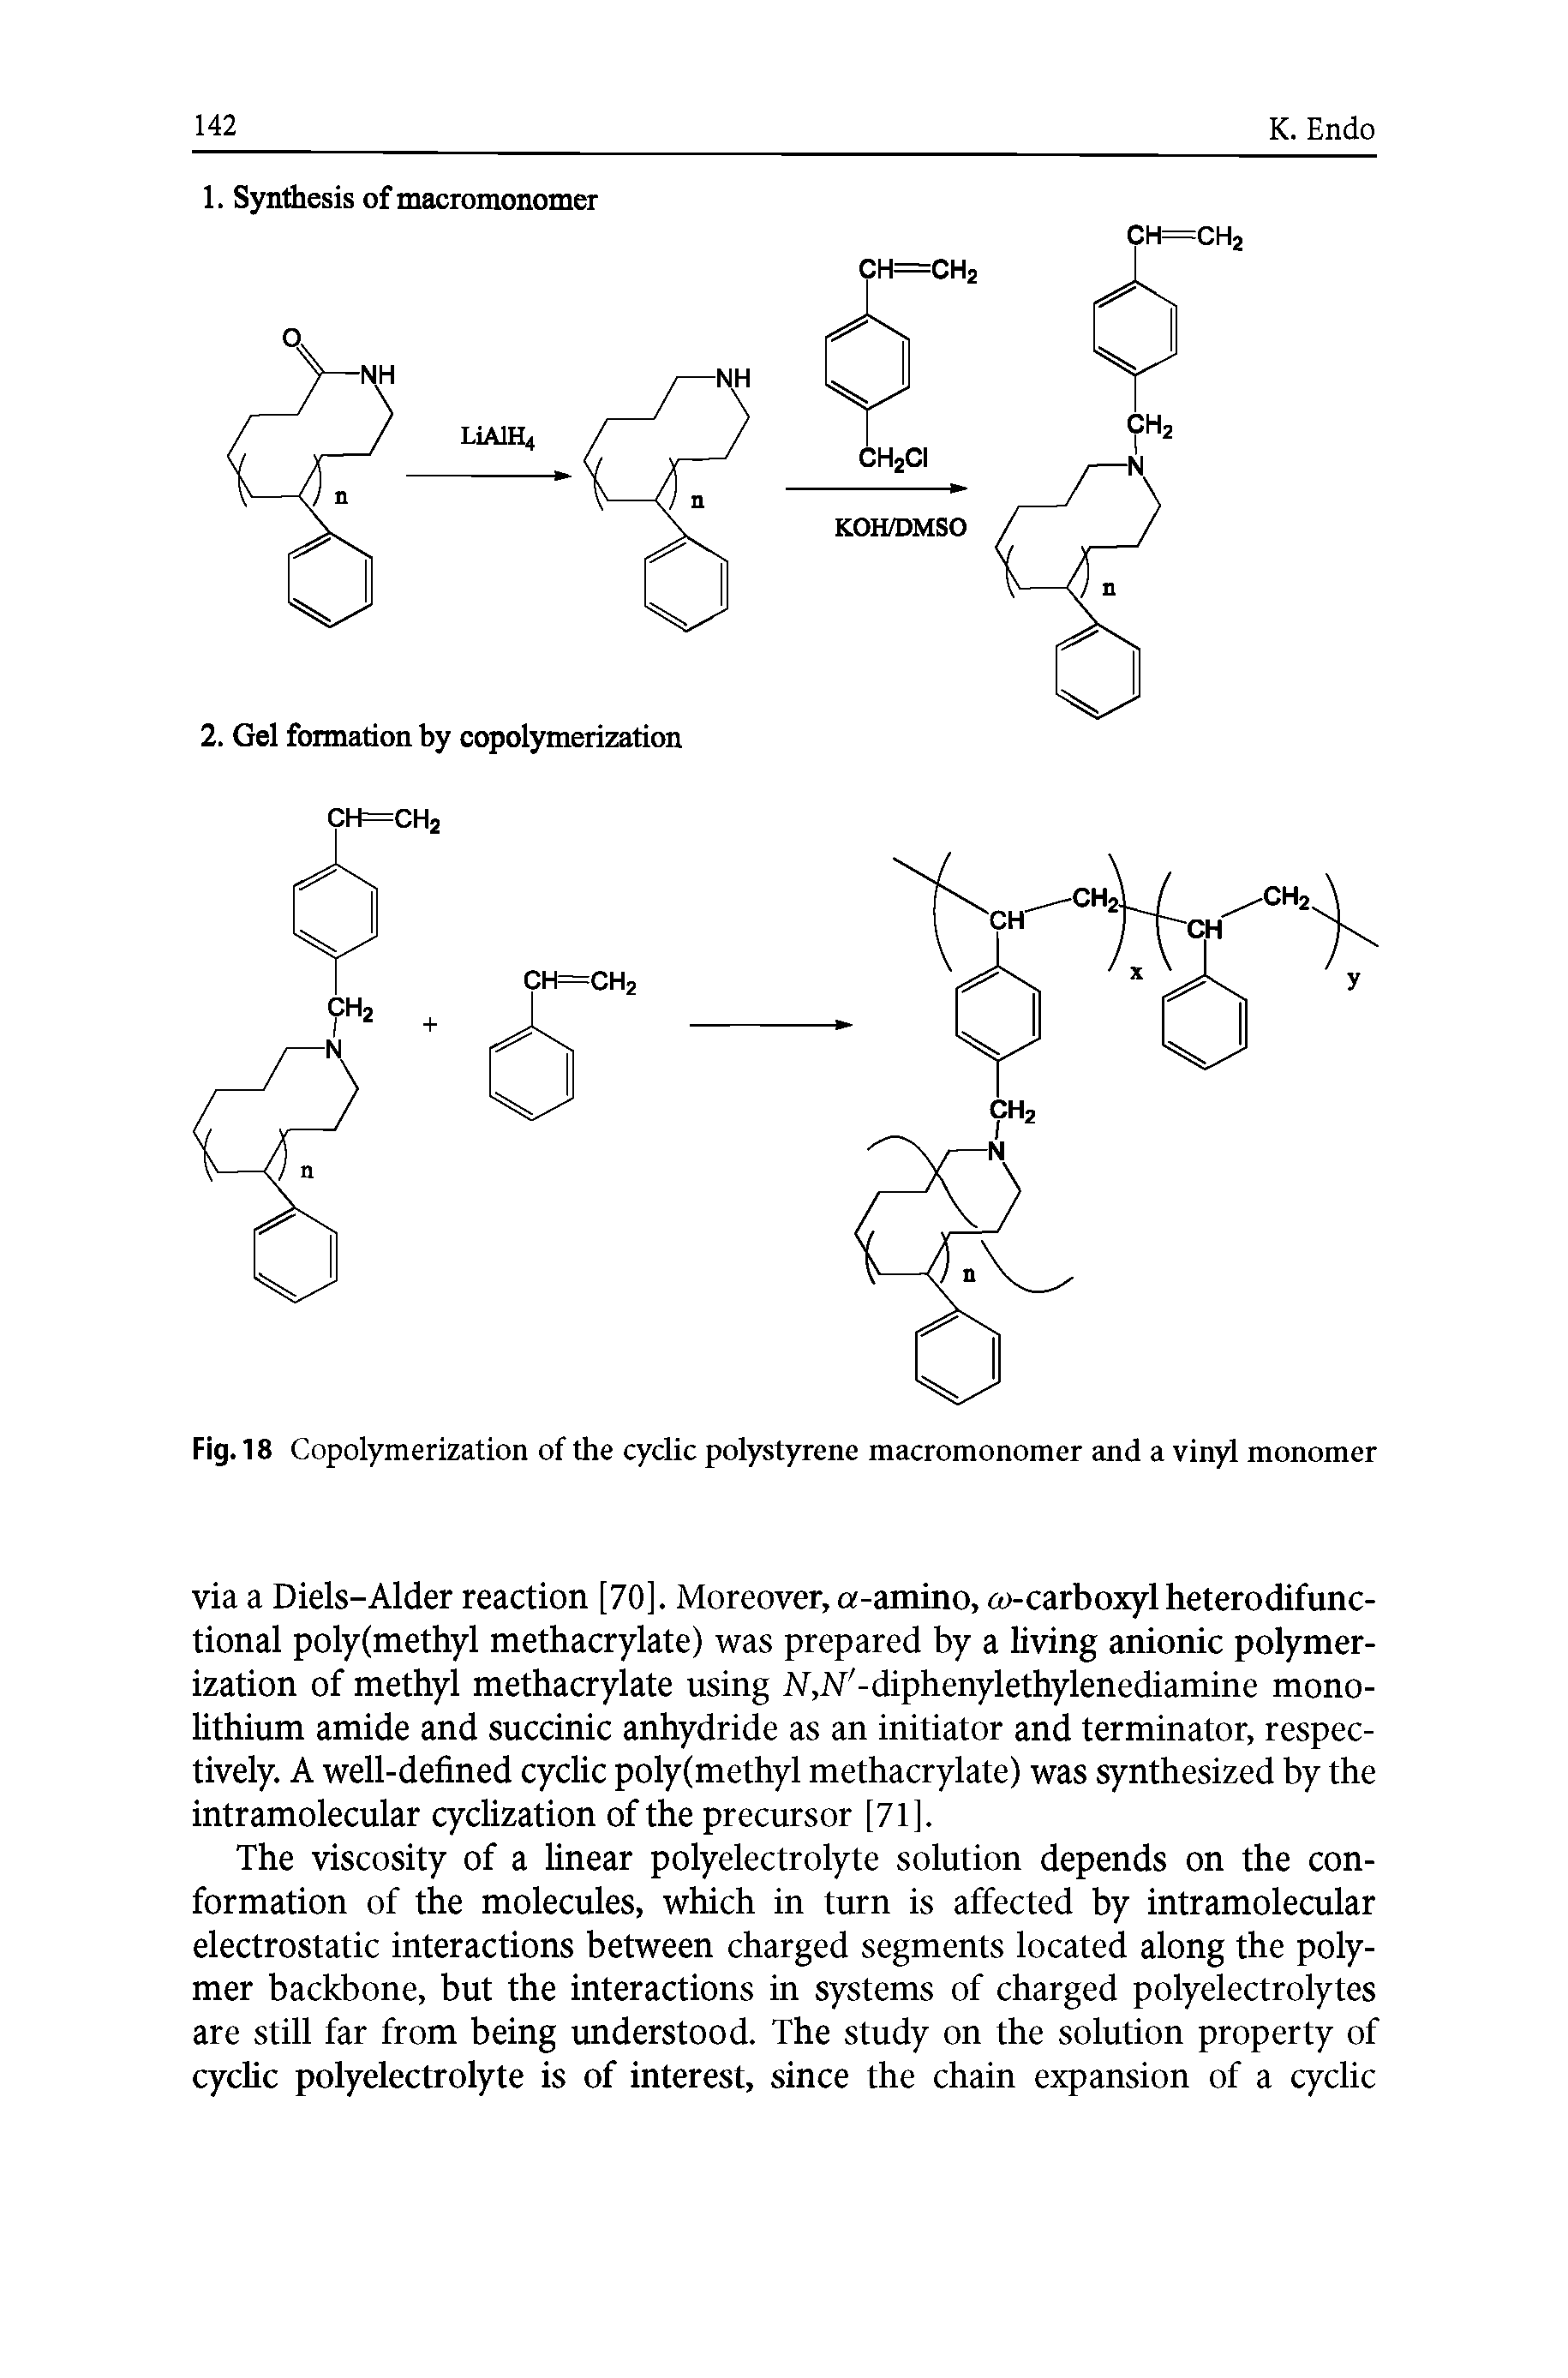 Fig. 18 Copolymerization of the cyclic polystyrene macromonomer and a vinyl monomer...